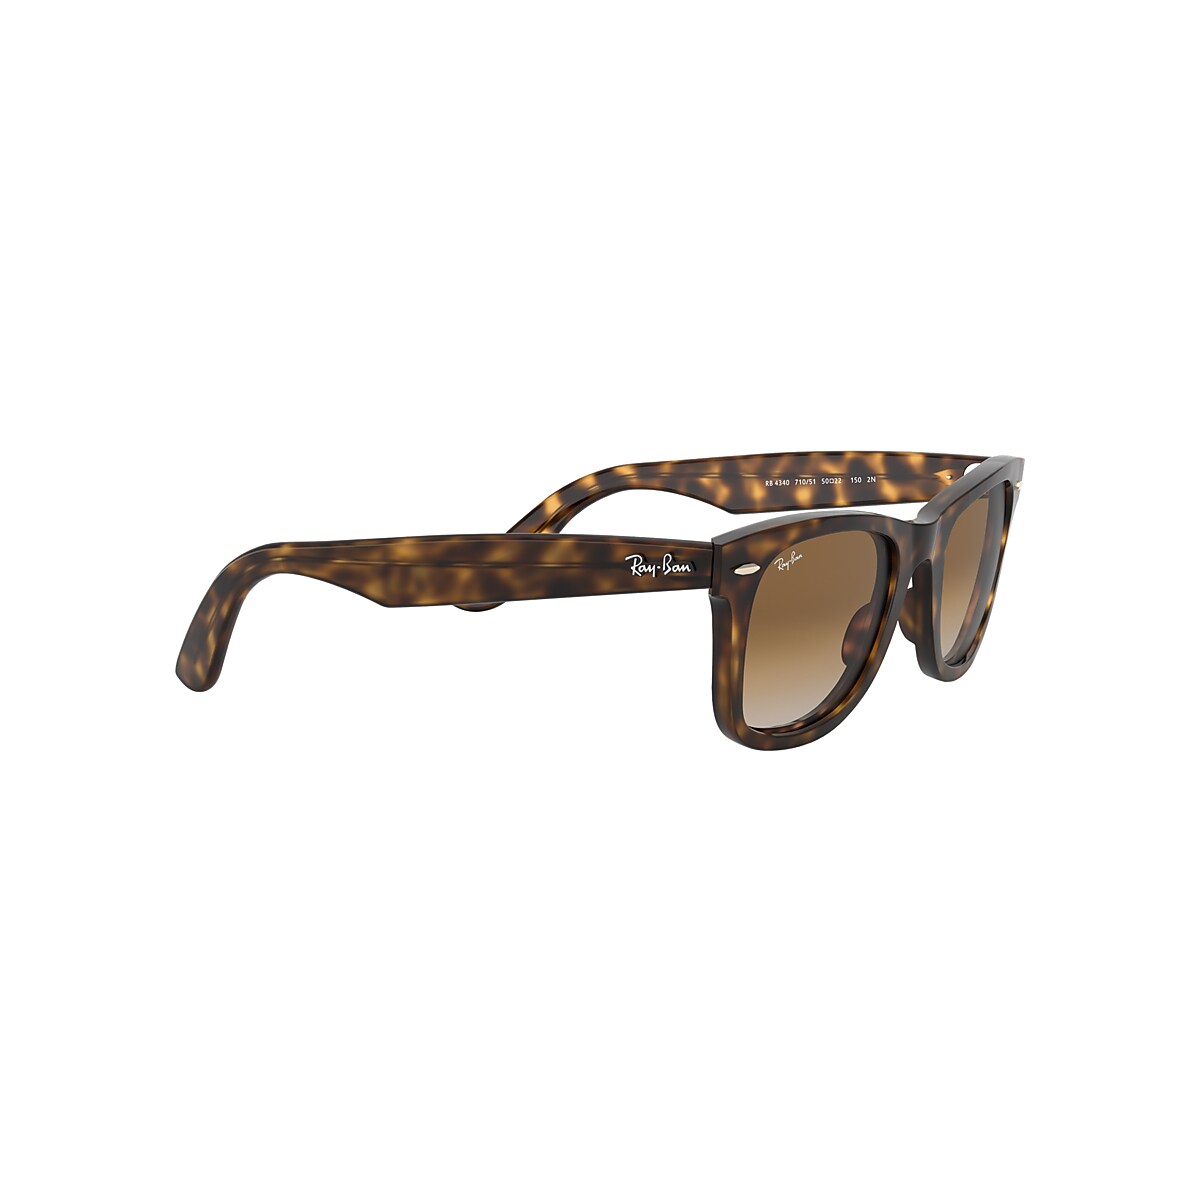 Wayfarer Ease Sunglasses in Tortoise and Light Brown | Ray-Ban®